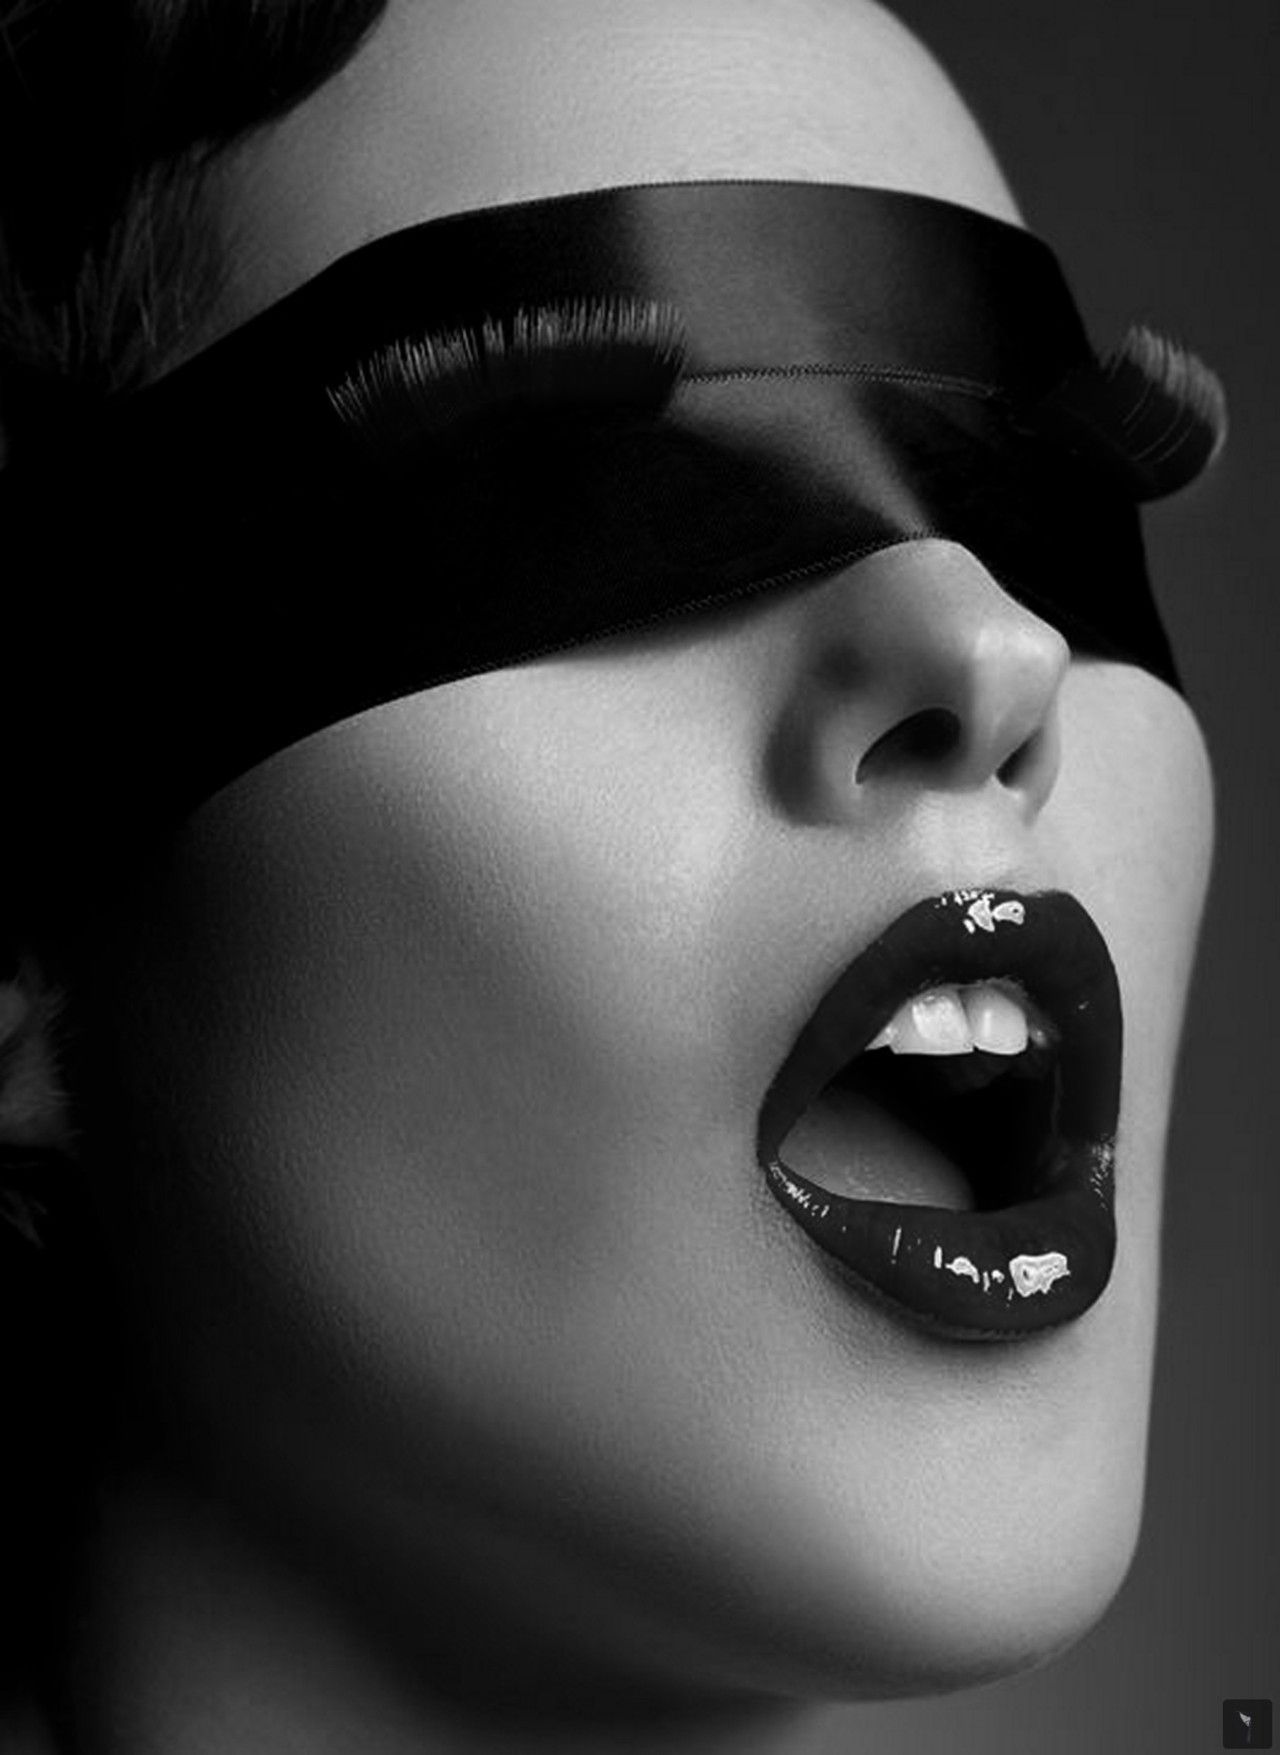 femenino sensual: Photo | Club shadowlands | Pinterest | Masking ...